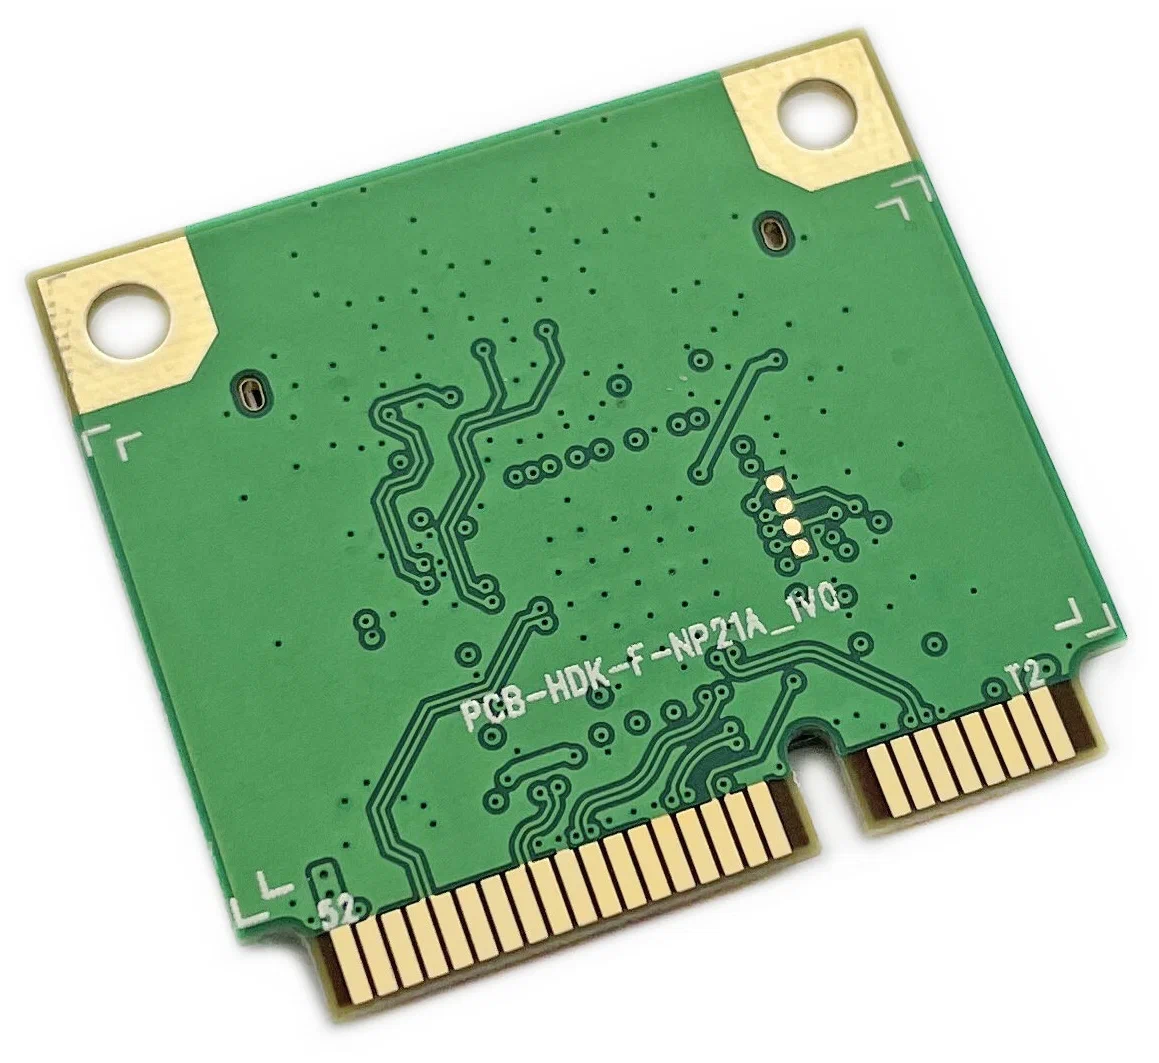 Realtek RTL8821AE (Mini PCI-E half-size, B/G/N/AC, 433 Mbit/s, 2.4/5 Ghz) - интерфейс подключения: mini PCI-E